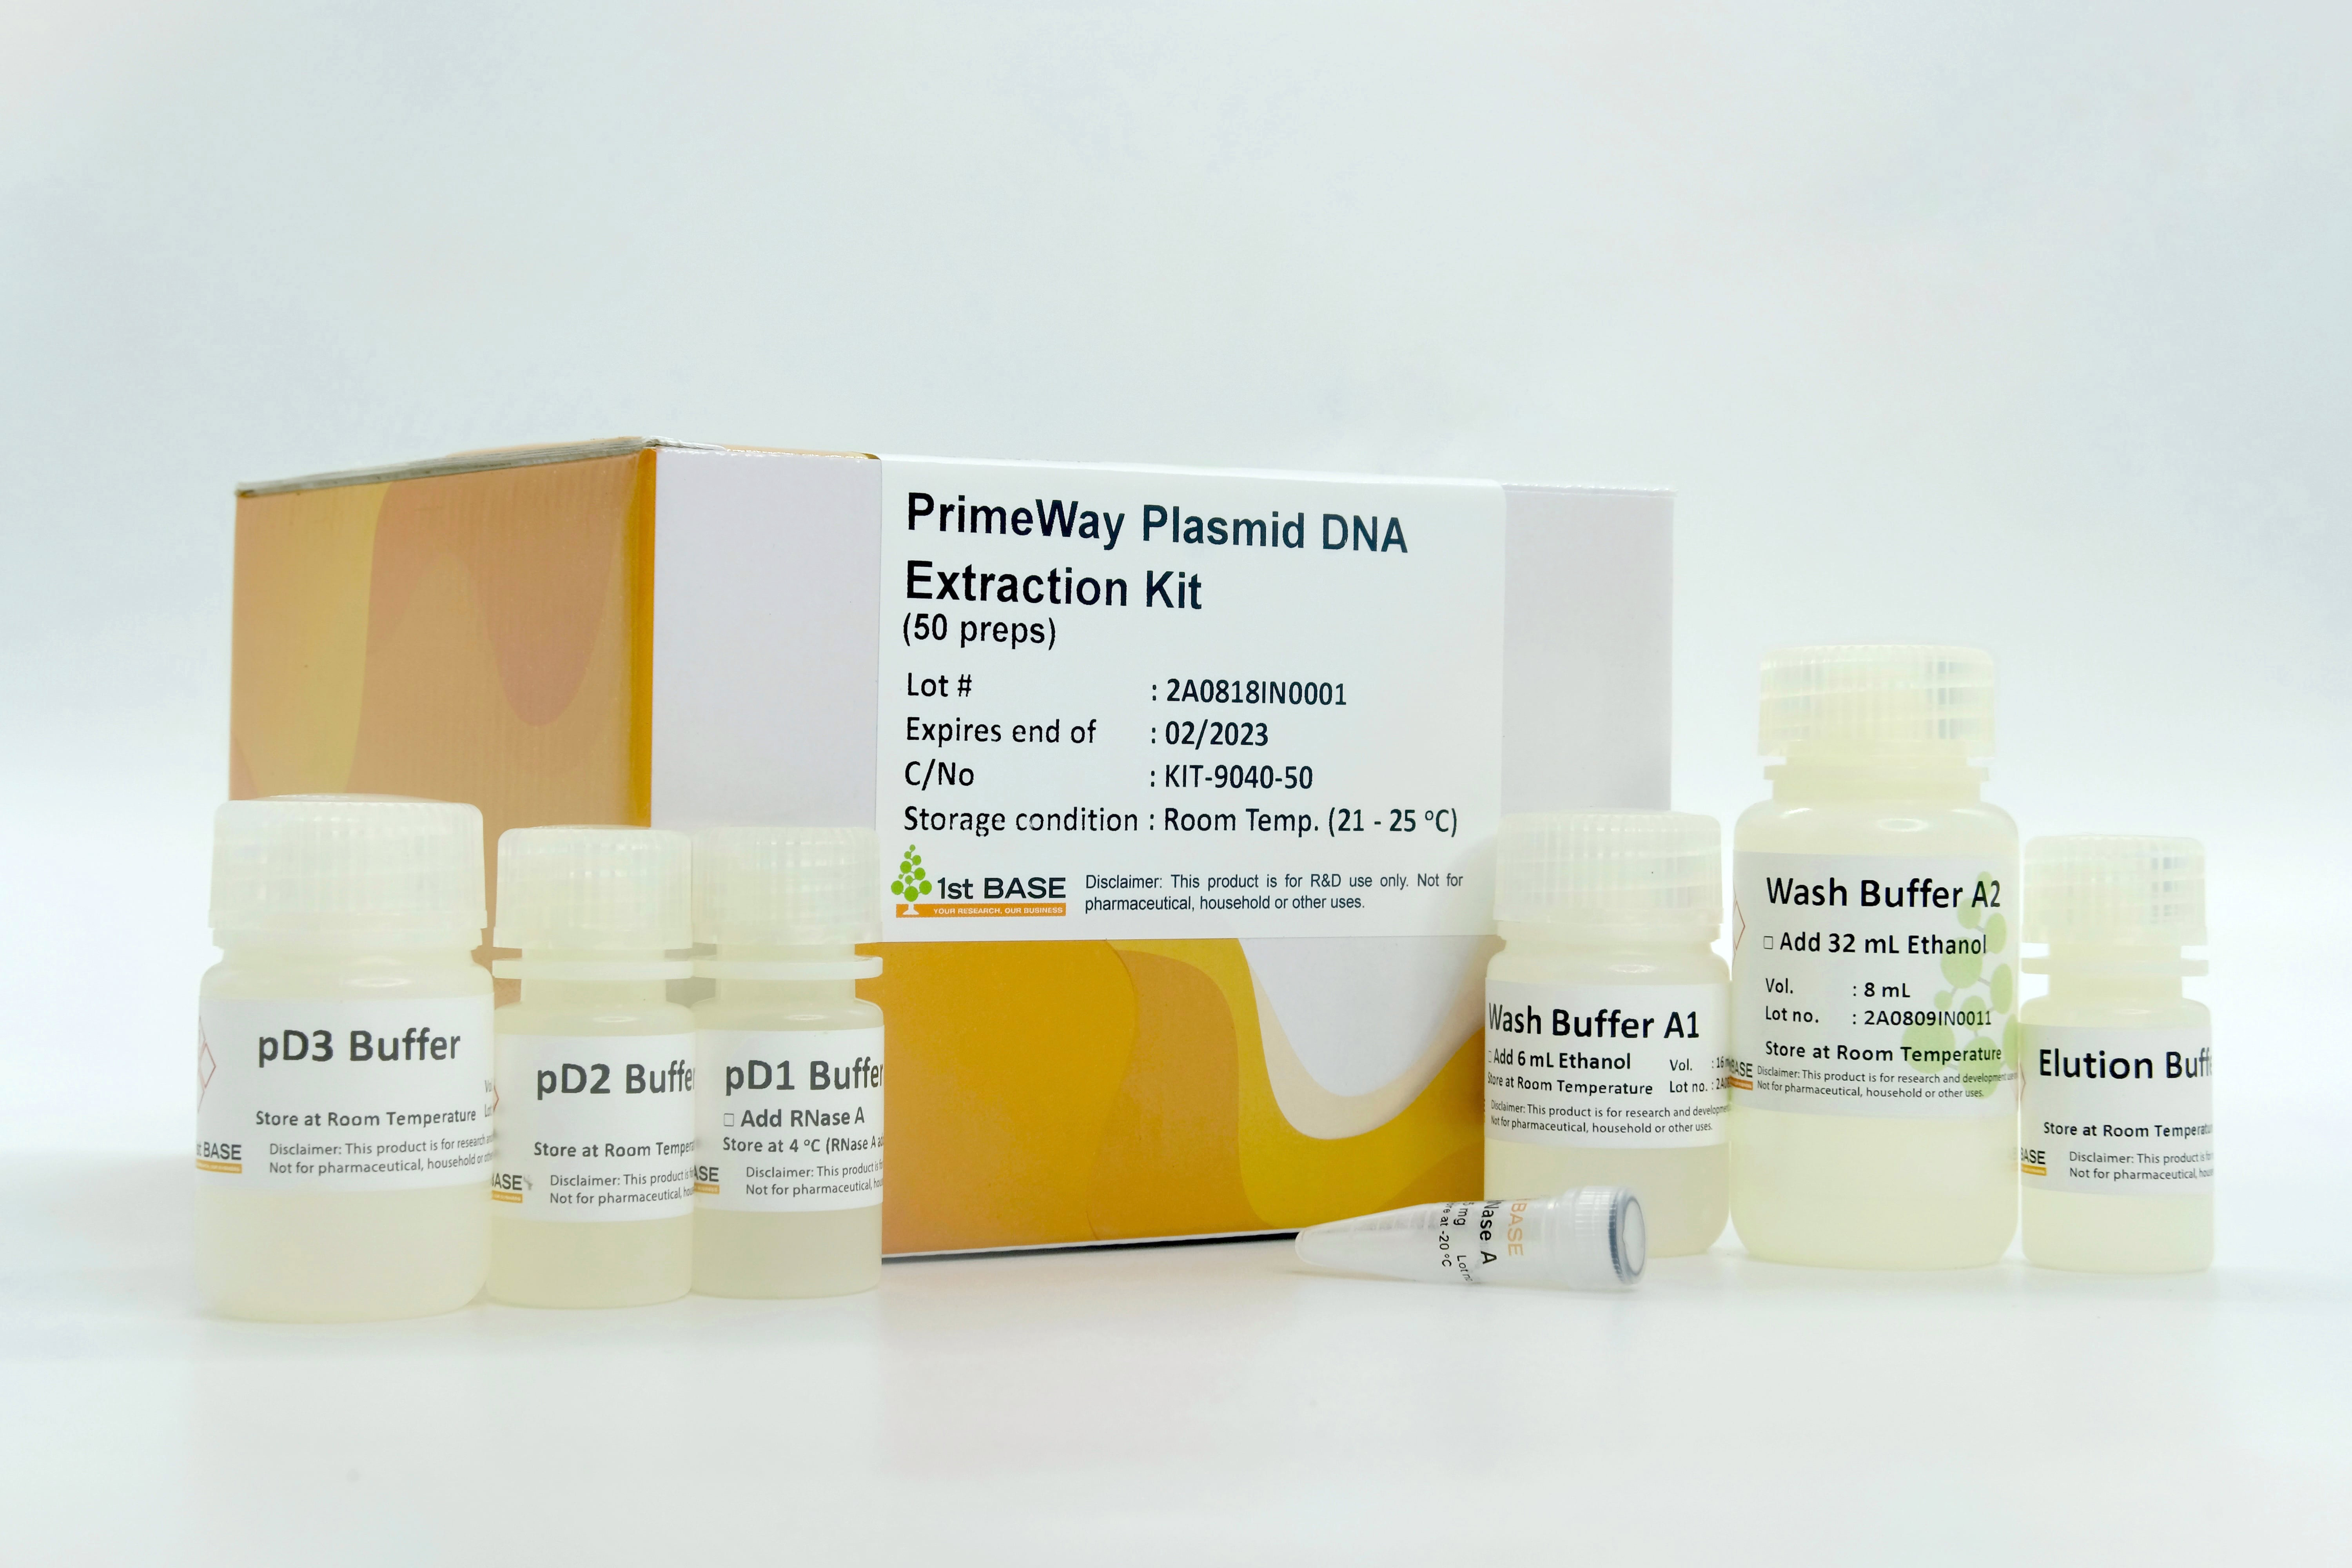 //base-asia.com/wp-content/uploads/2021/11/PrimeWay-Plasmid-DNA-Kit.jpg